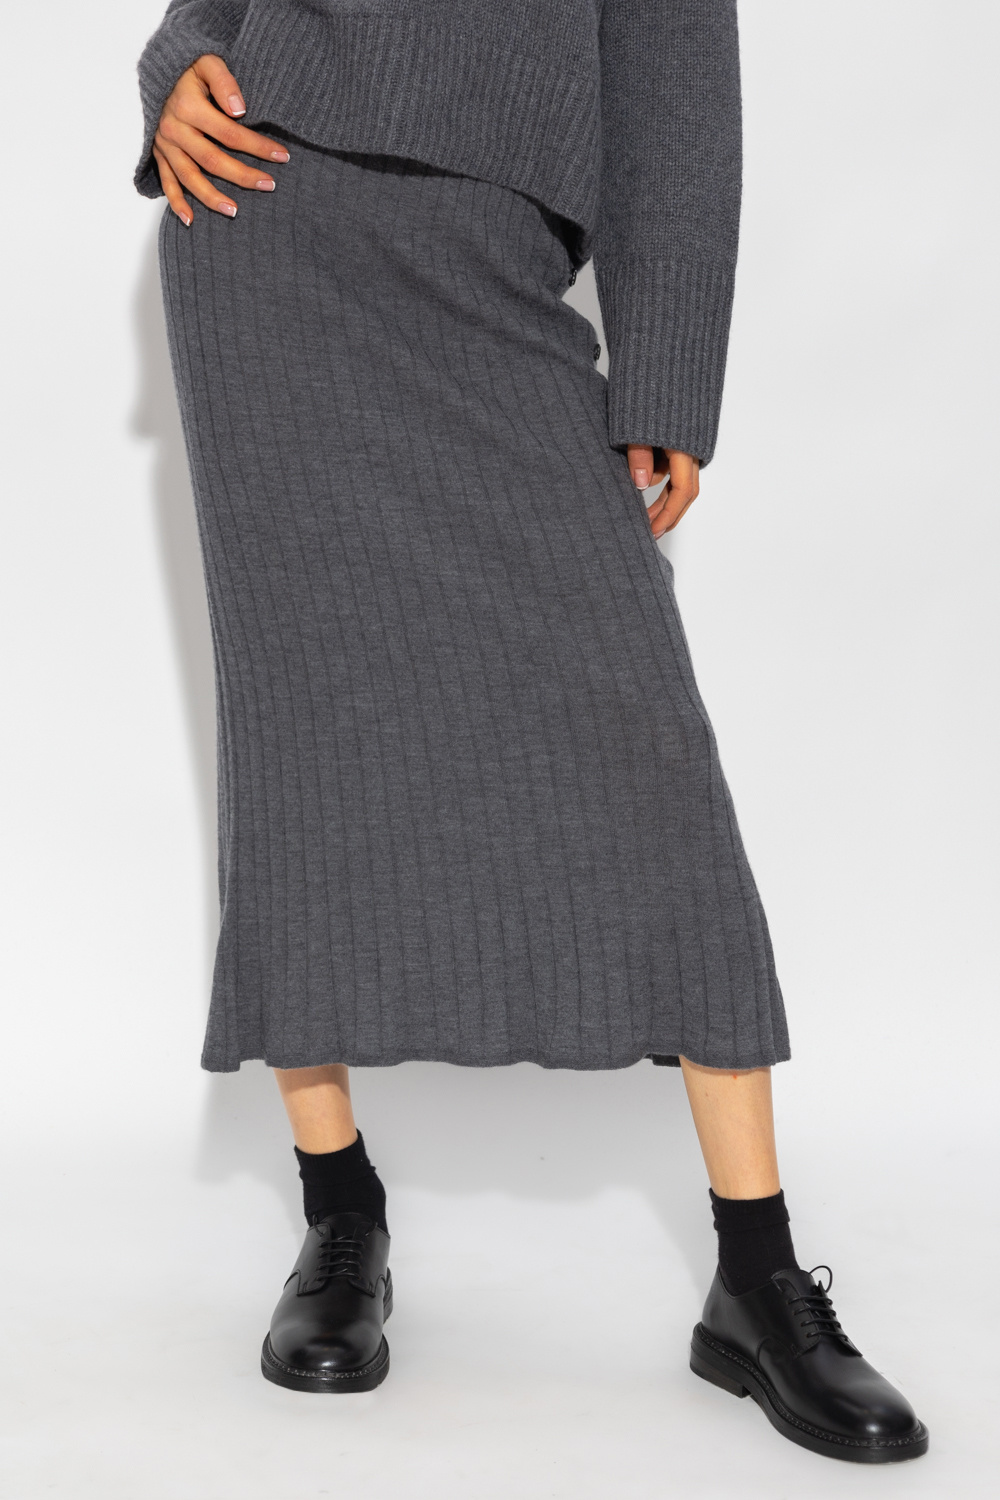 Lisa Yang ‘Katie’ cashmere skirt